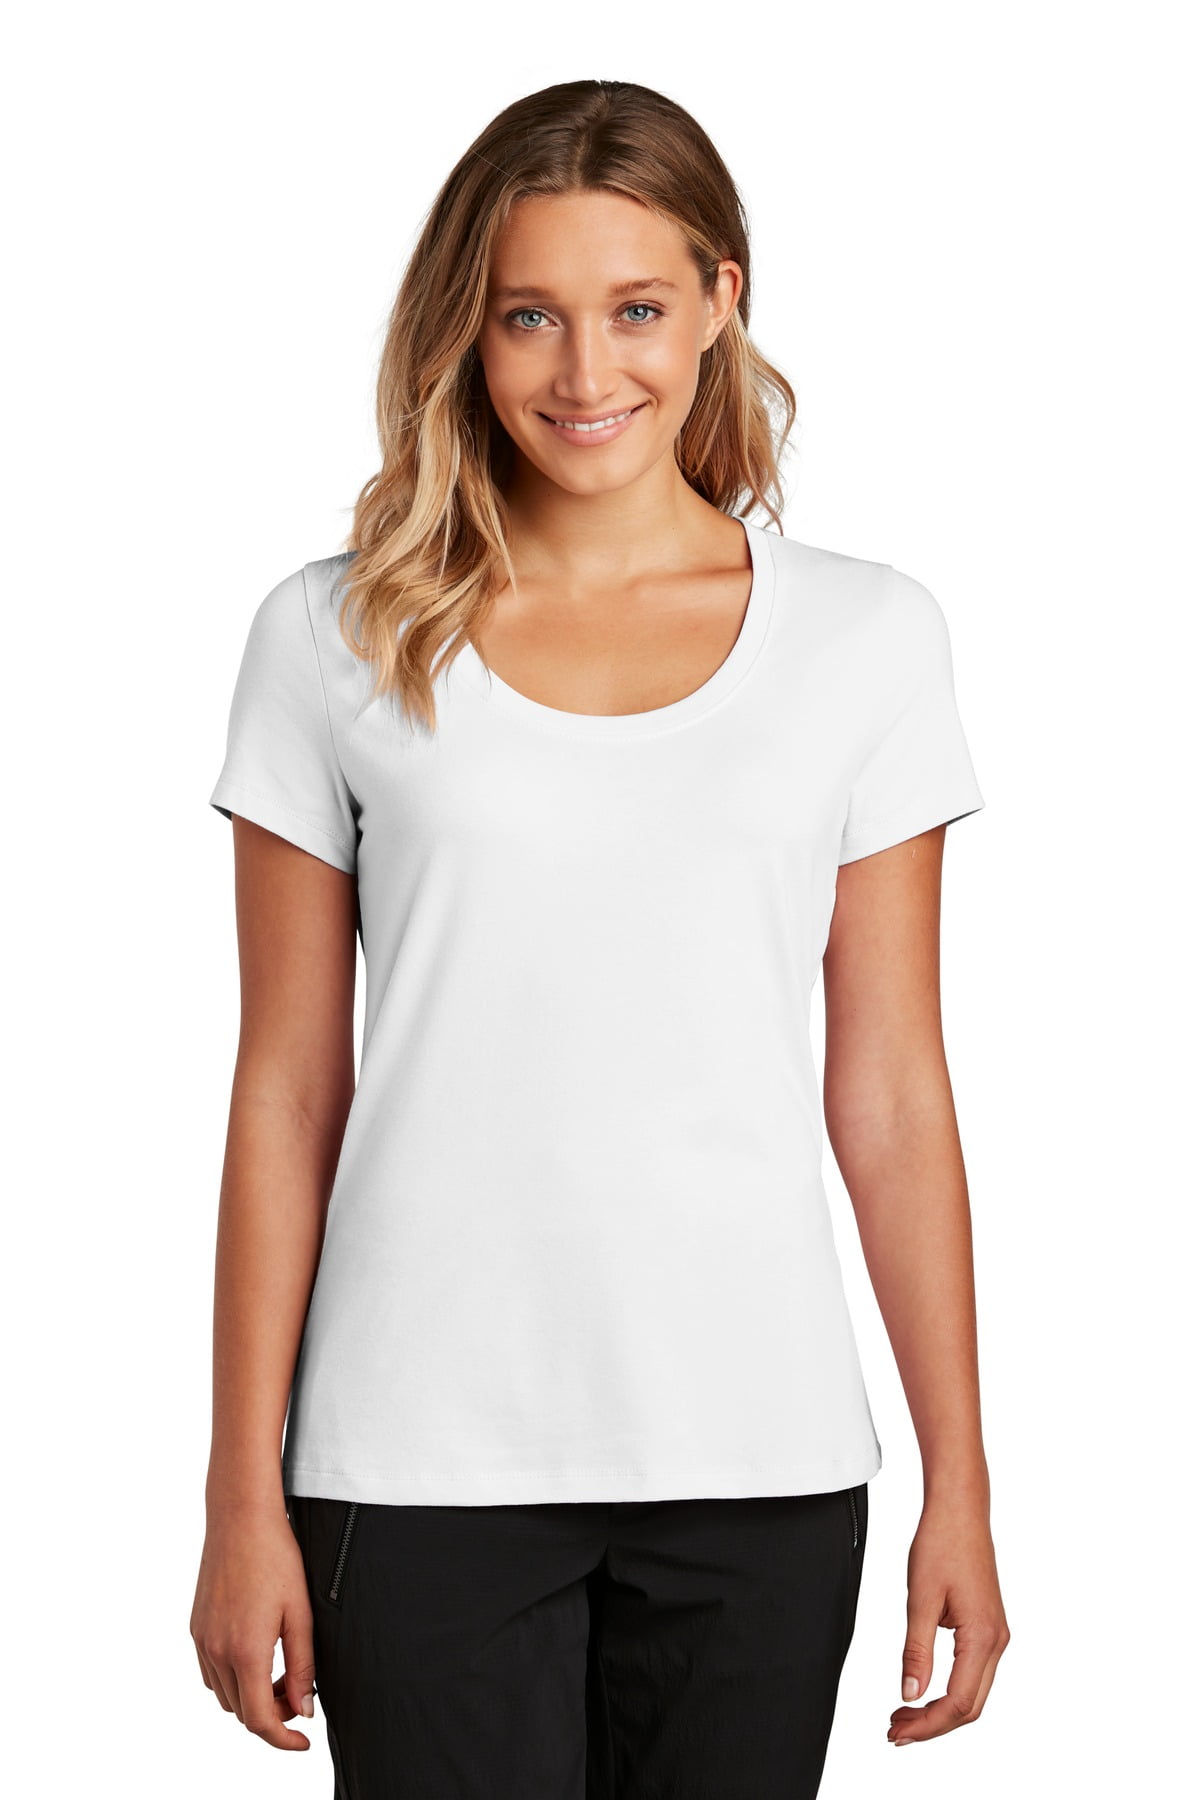 District Adult Female Women Plain Short Sleeves T-Shirt Kelly